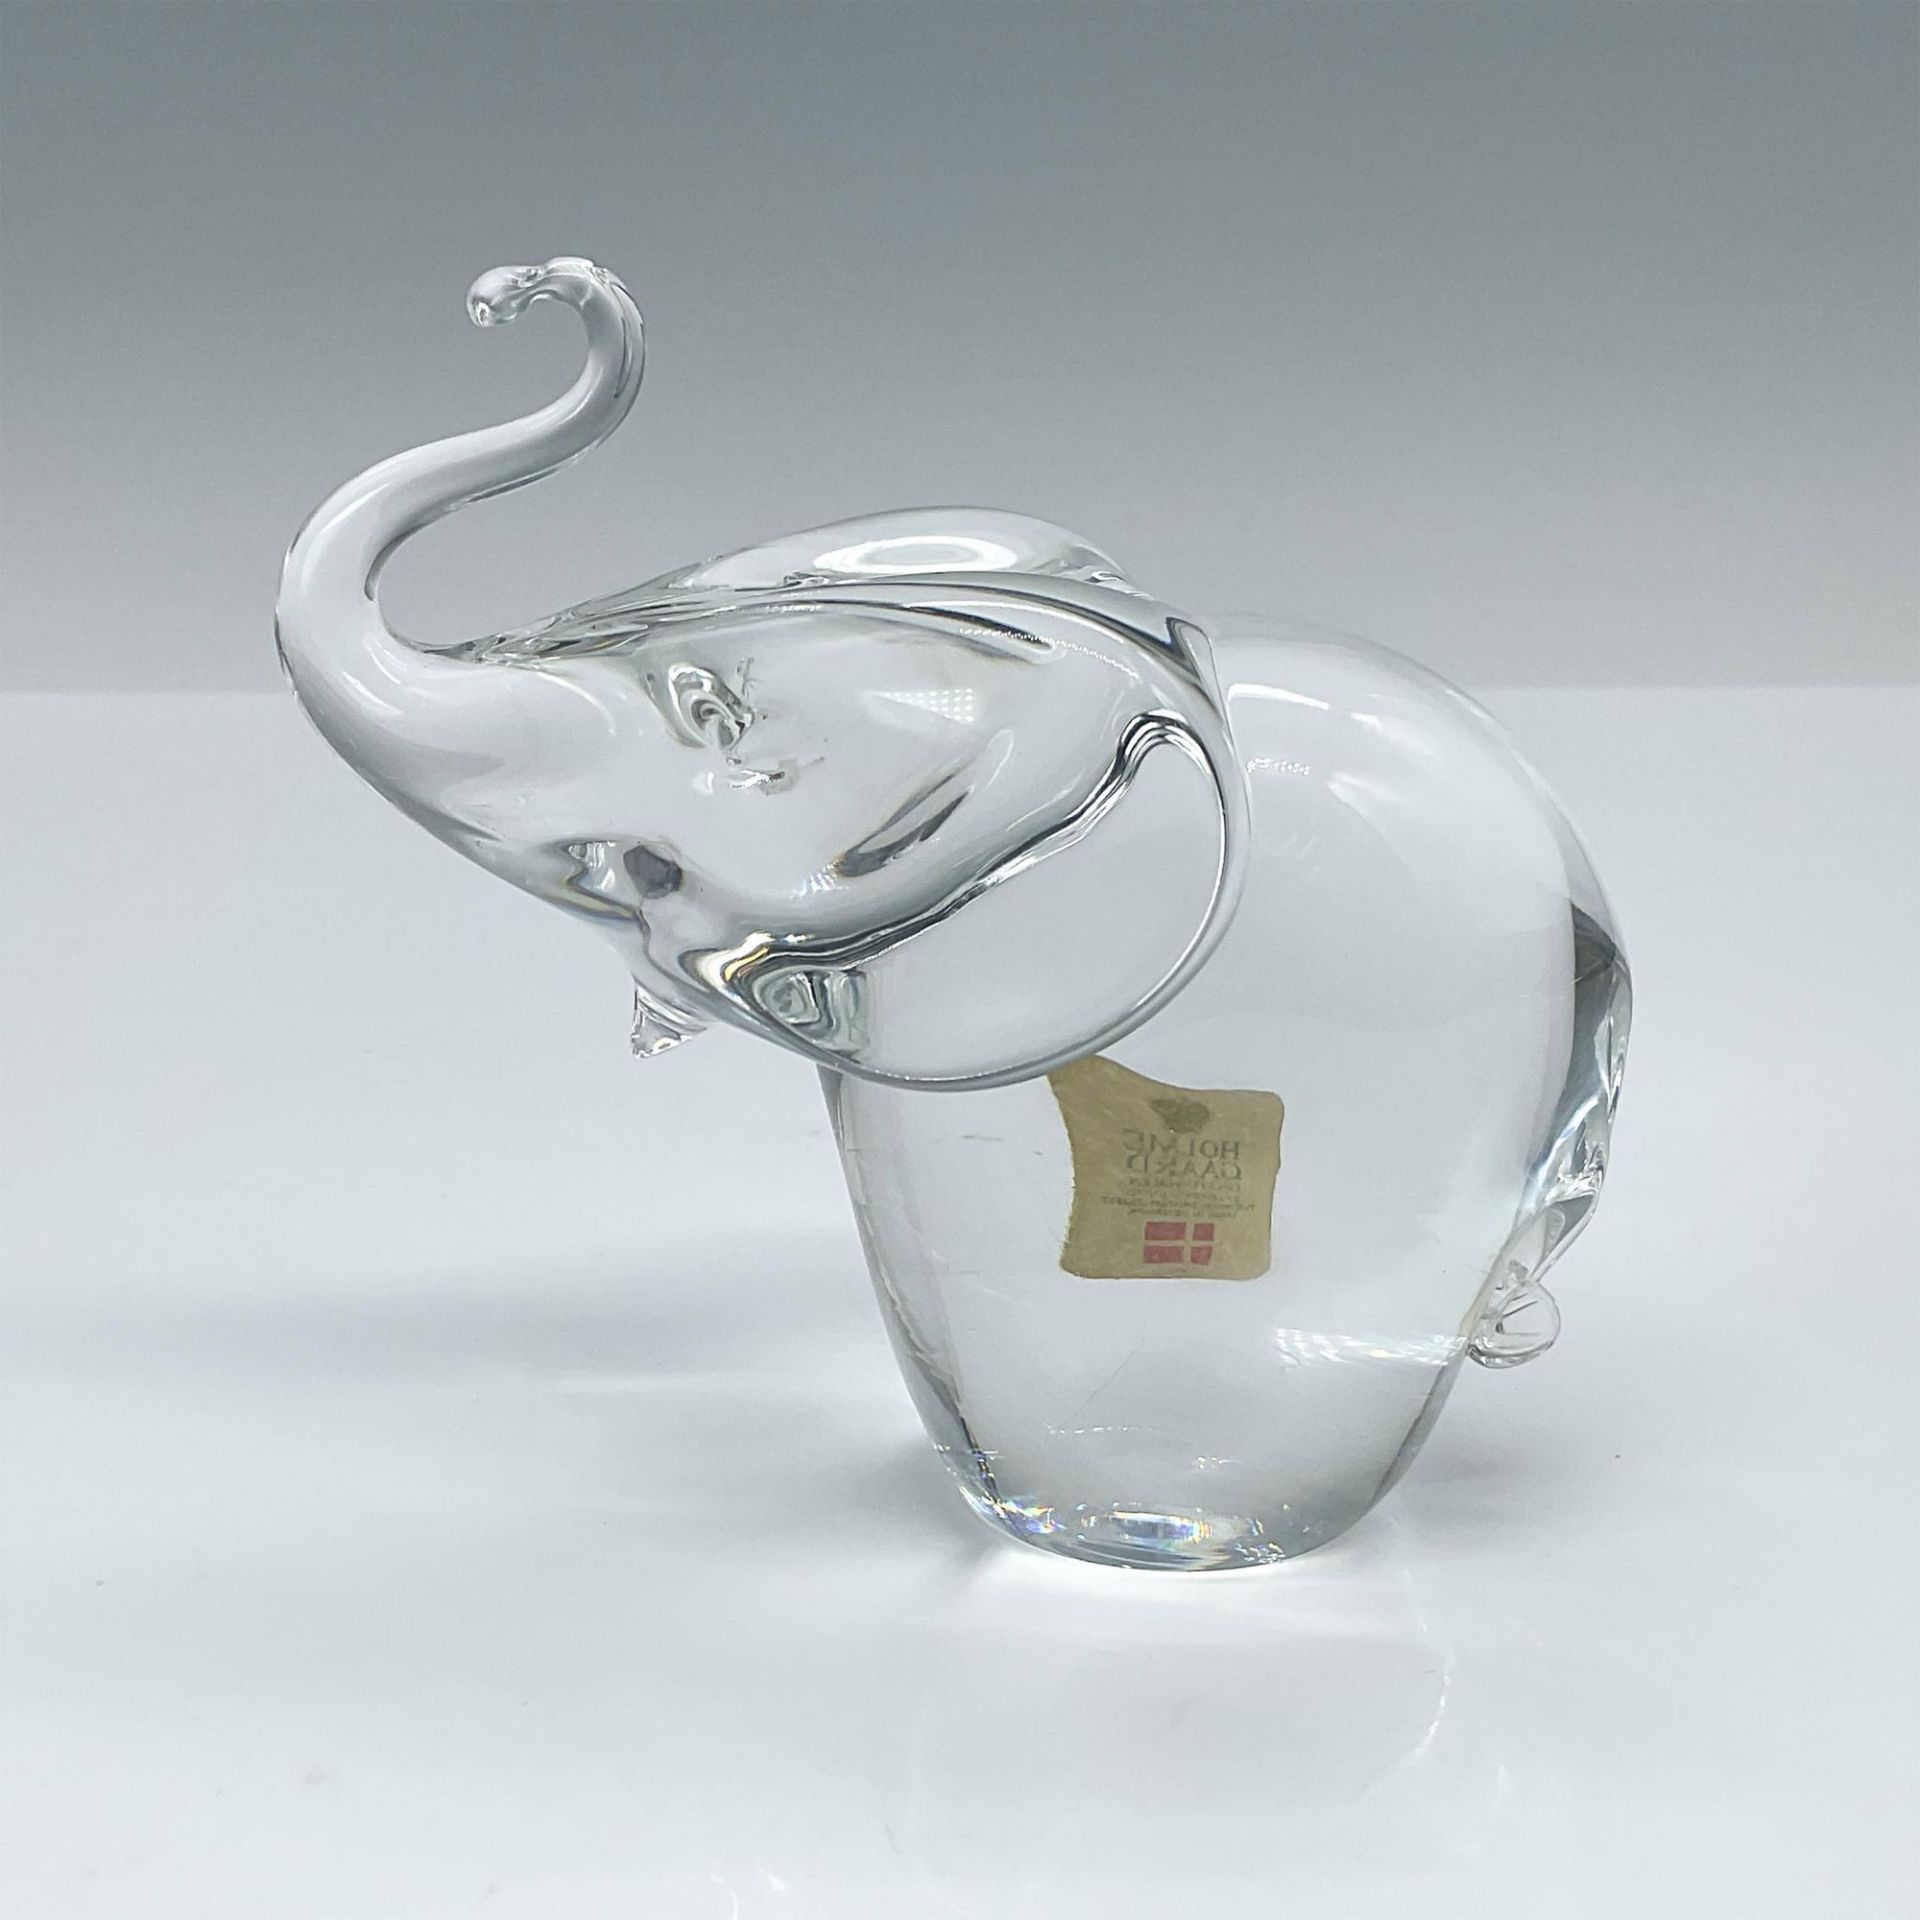 Holme Gaard Crystal Elephant Figurine - Image 2 of 3